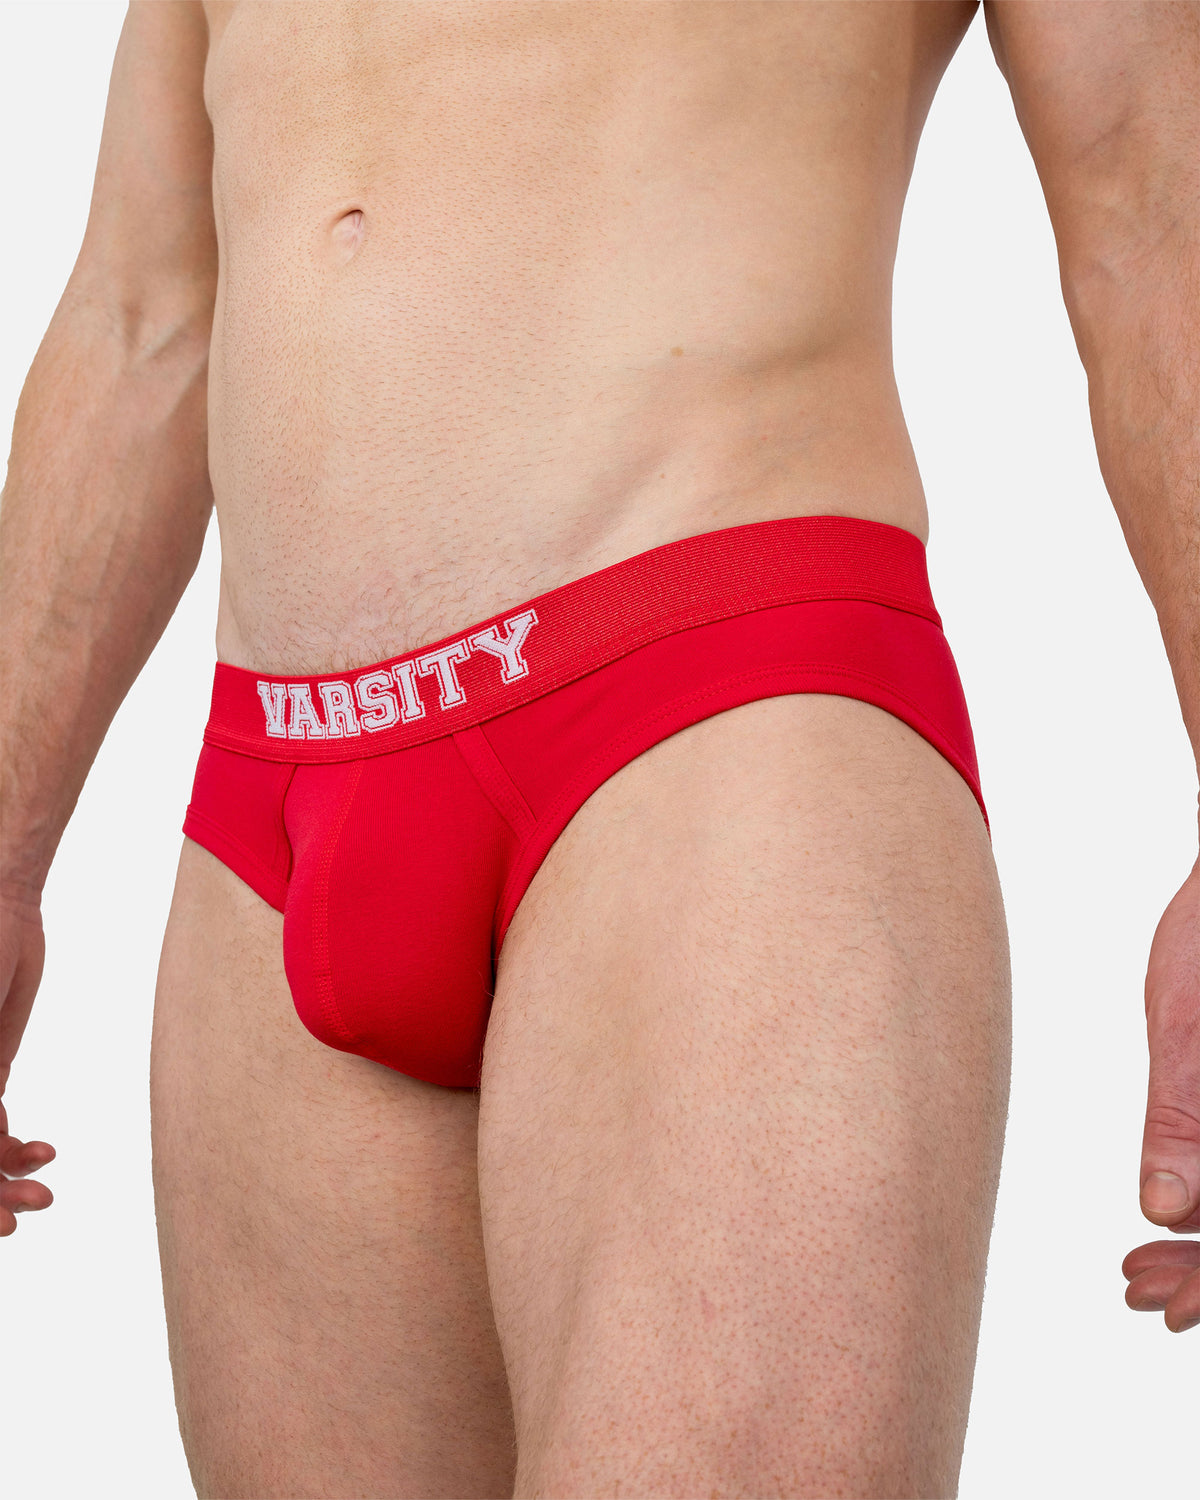 Buy Varsity Briefs and Underwear Online in Australia - Daily Jocks